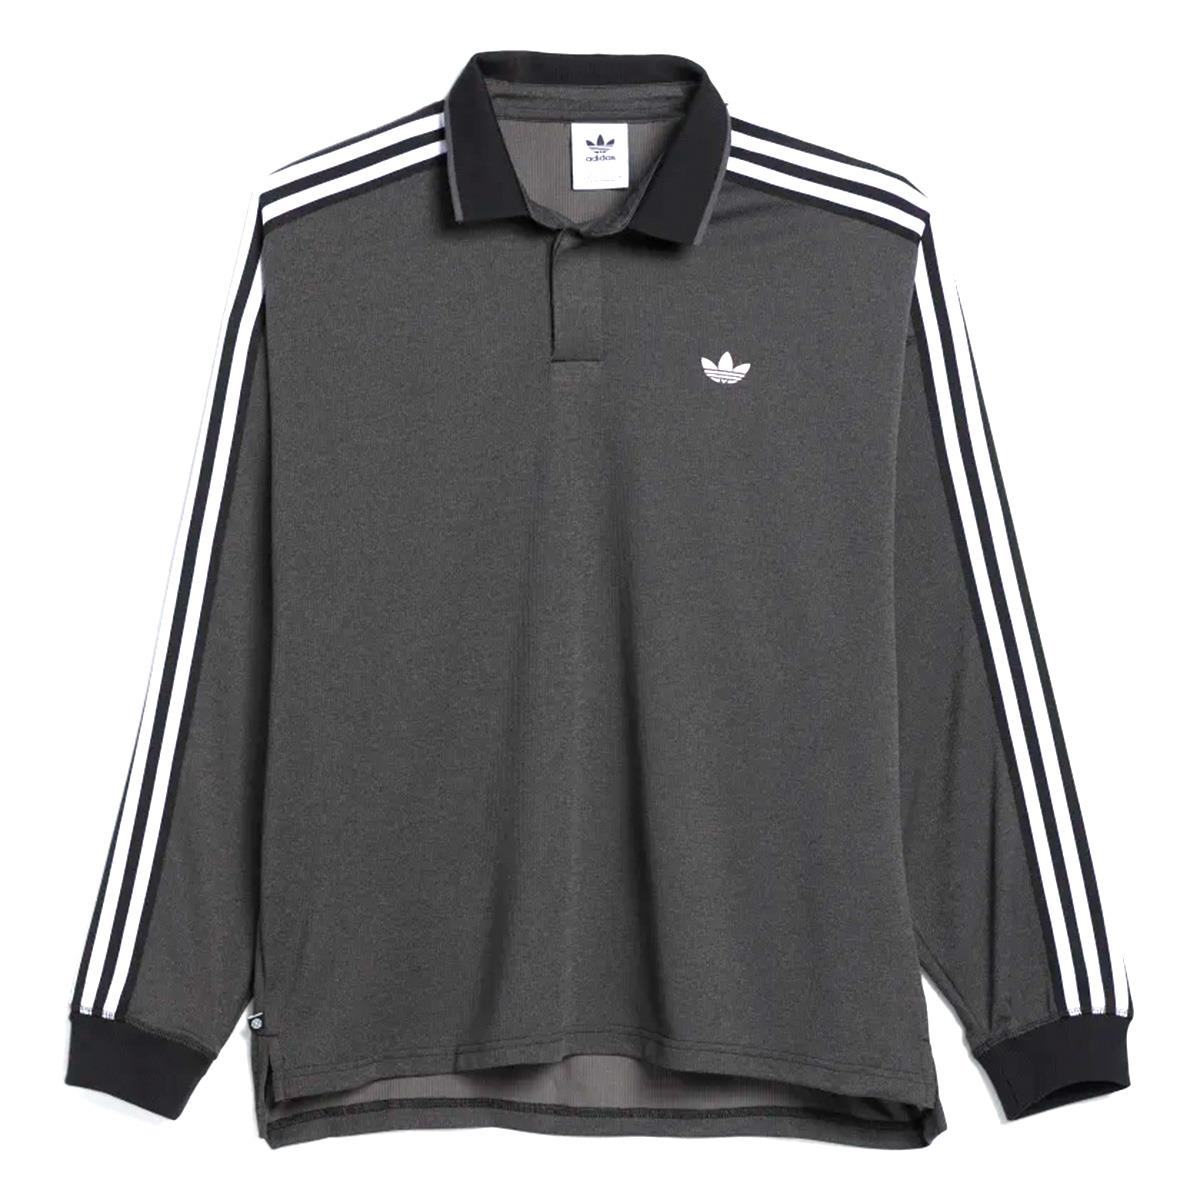 Adidas Long Sleeve Polo Jersey - Black Small